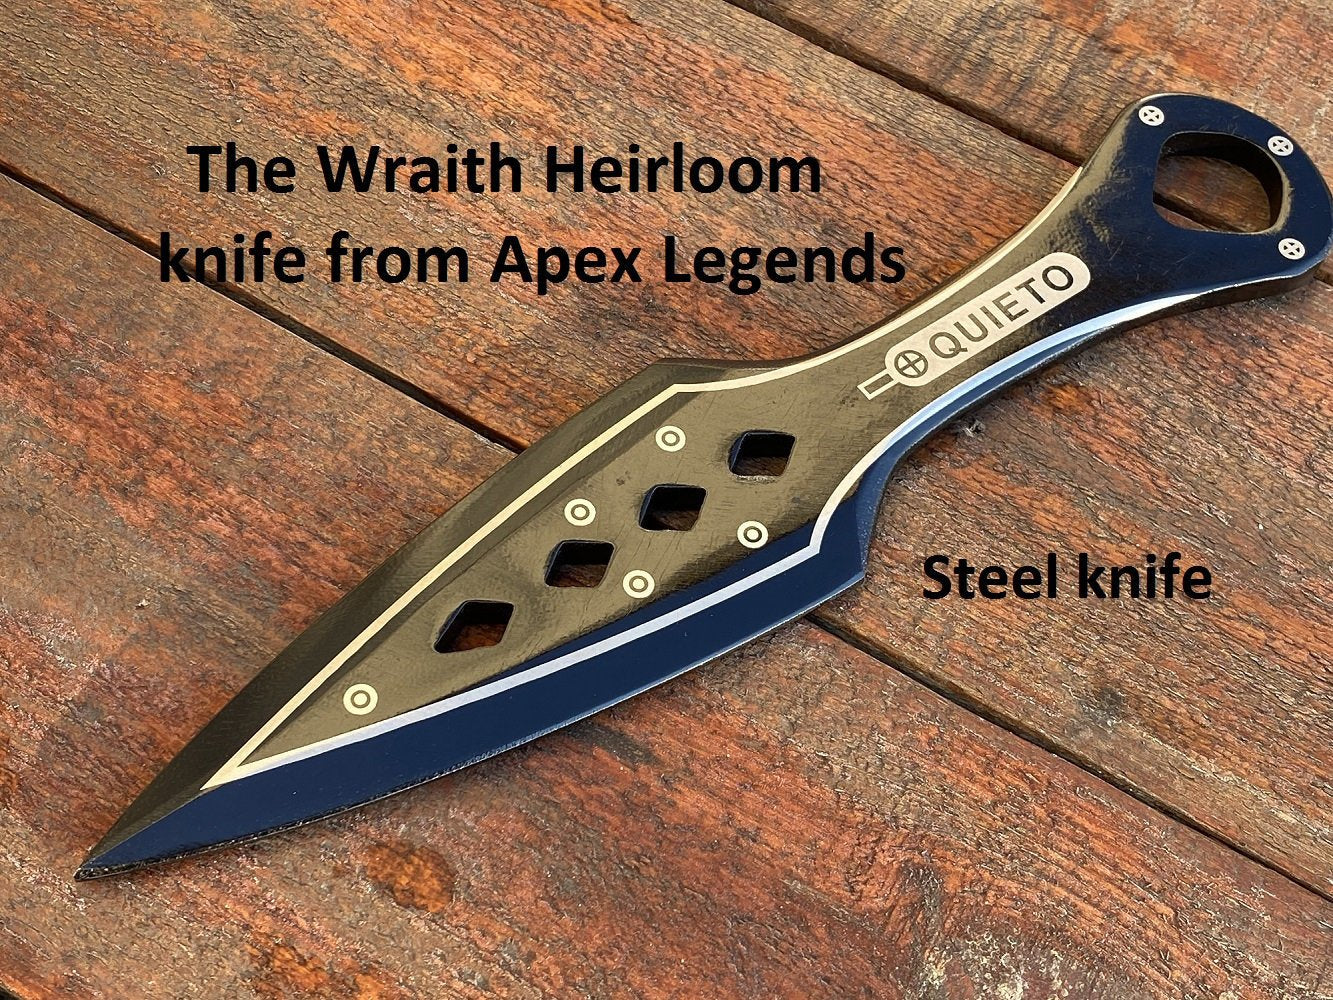 Kunai, Apex Legends, Wraith heirloom knife, steel gift, 11th anniversary, birthday,Christmas,gift for men,knife gift,steel anniversary,knife